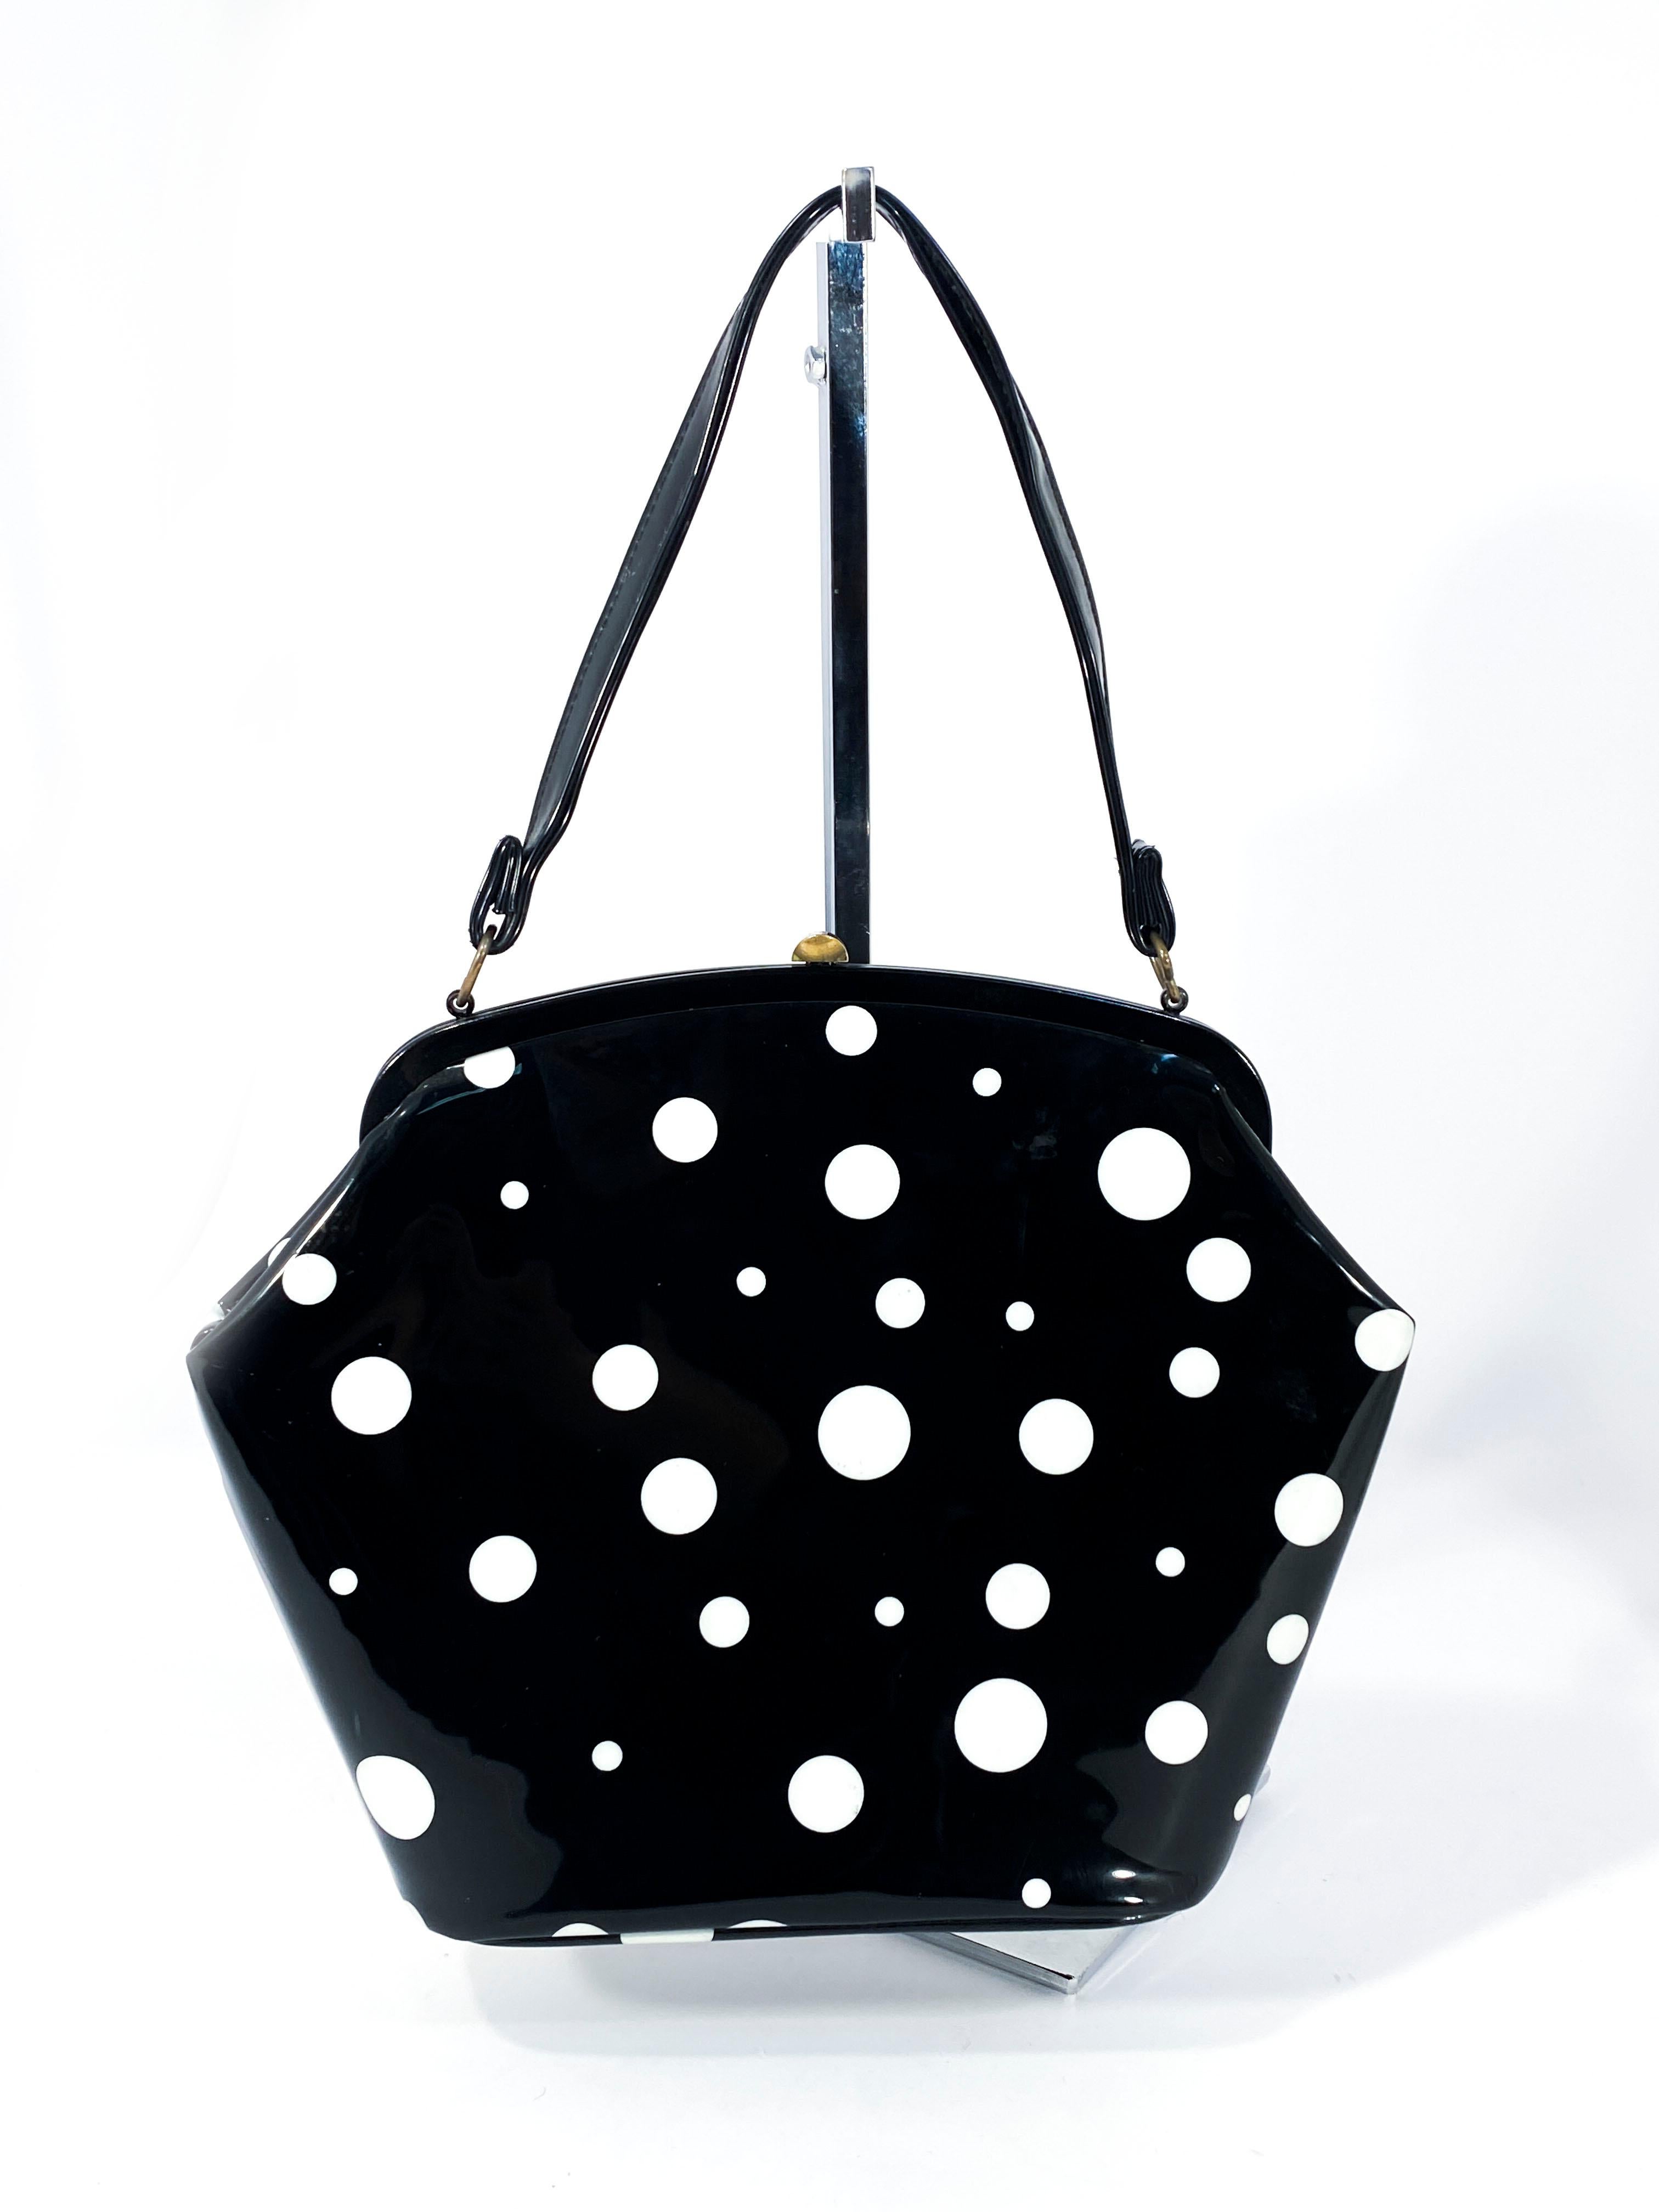 black and white polka dot purse